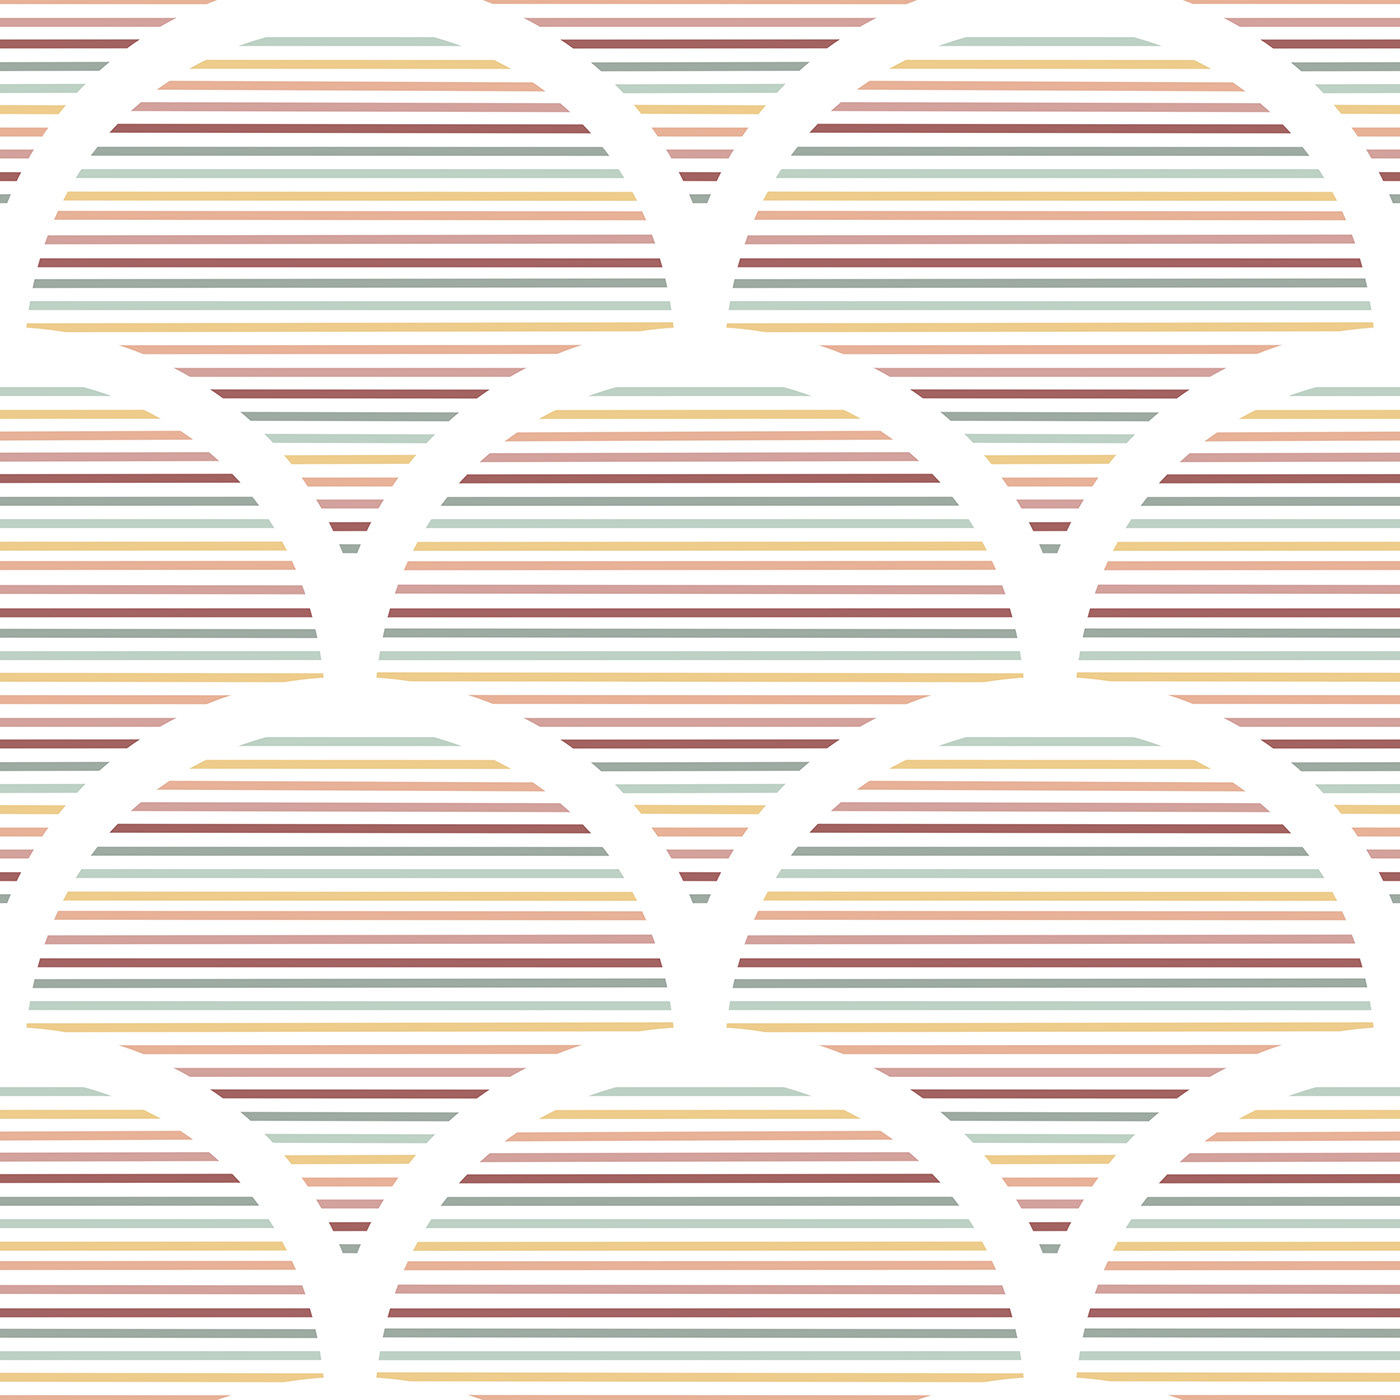 pattern surface design surface pattern design seamless repeat scallop mermaid stripes striped Retro vintage minimal Scales